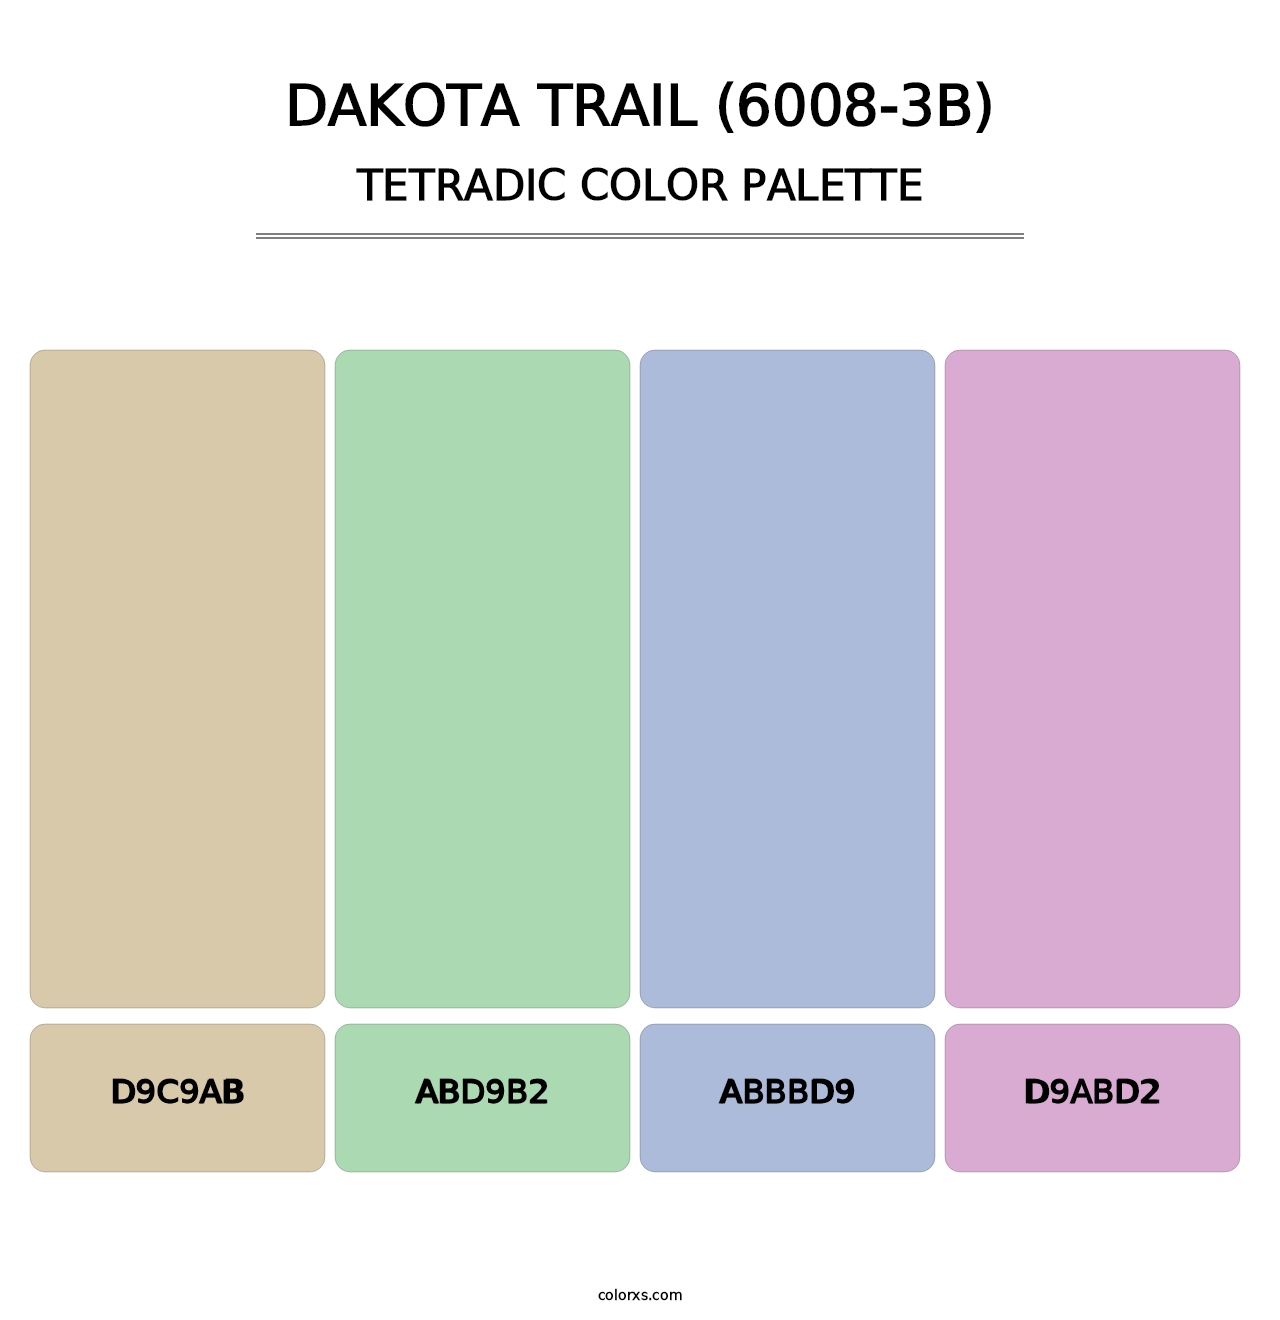 Dakota Trail (6008-3B) - Tetradic Color Palette